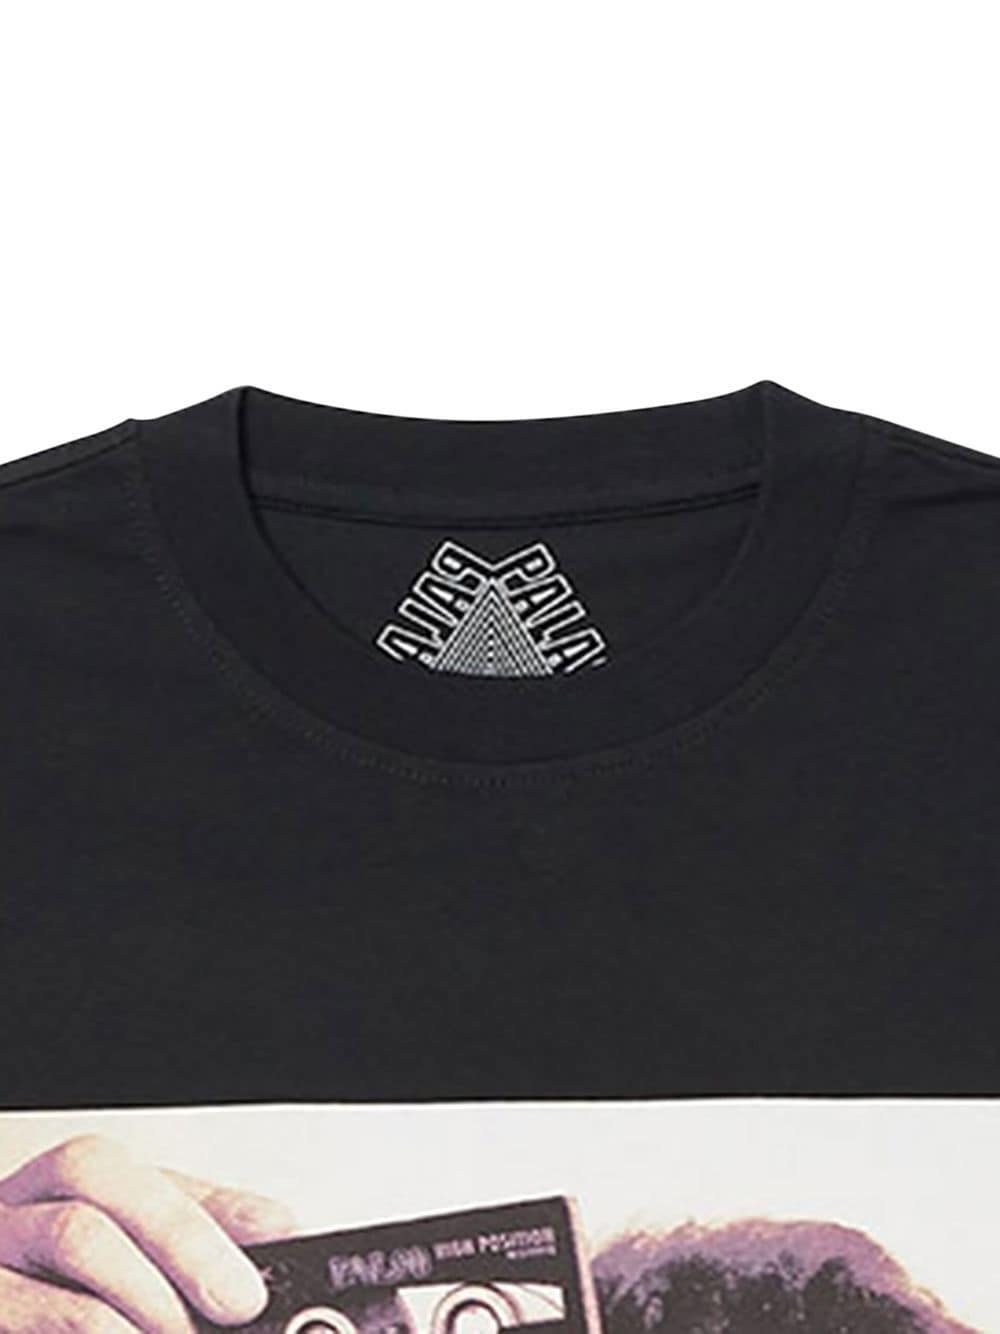  Palace Deckhead Photograph-print T-shirt - Black 